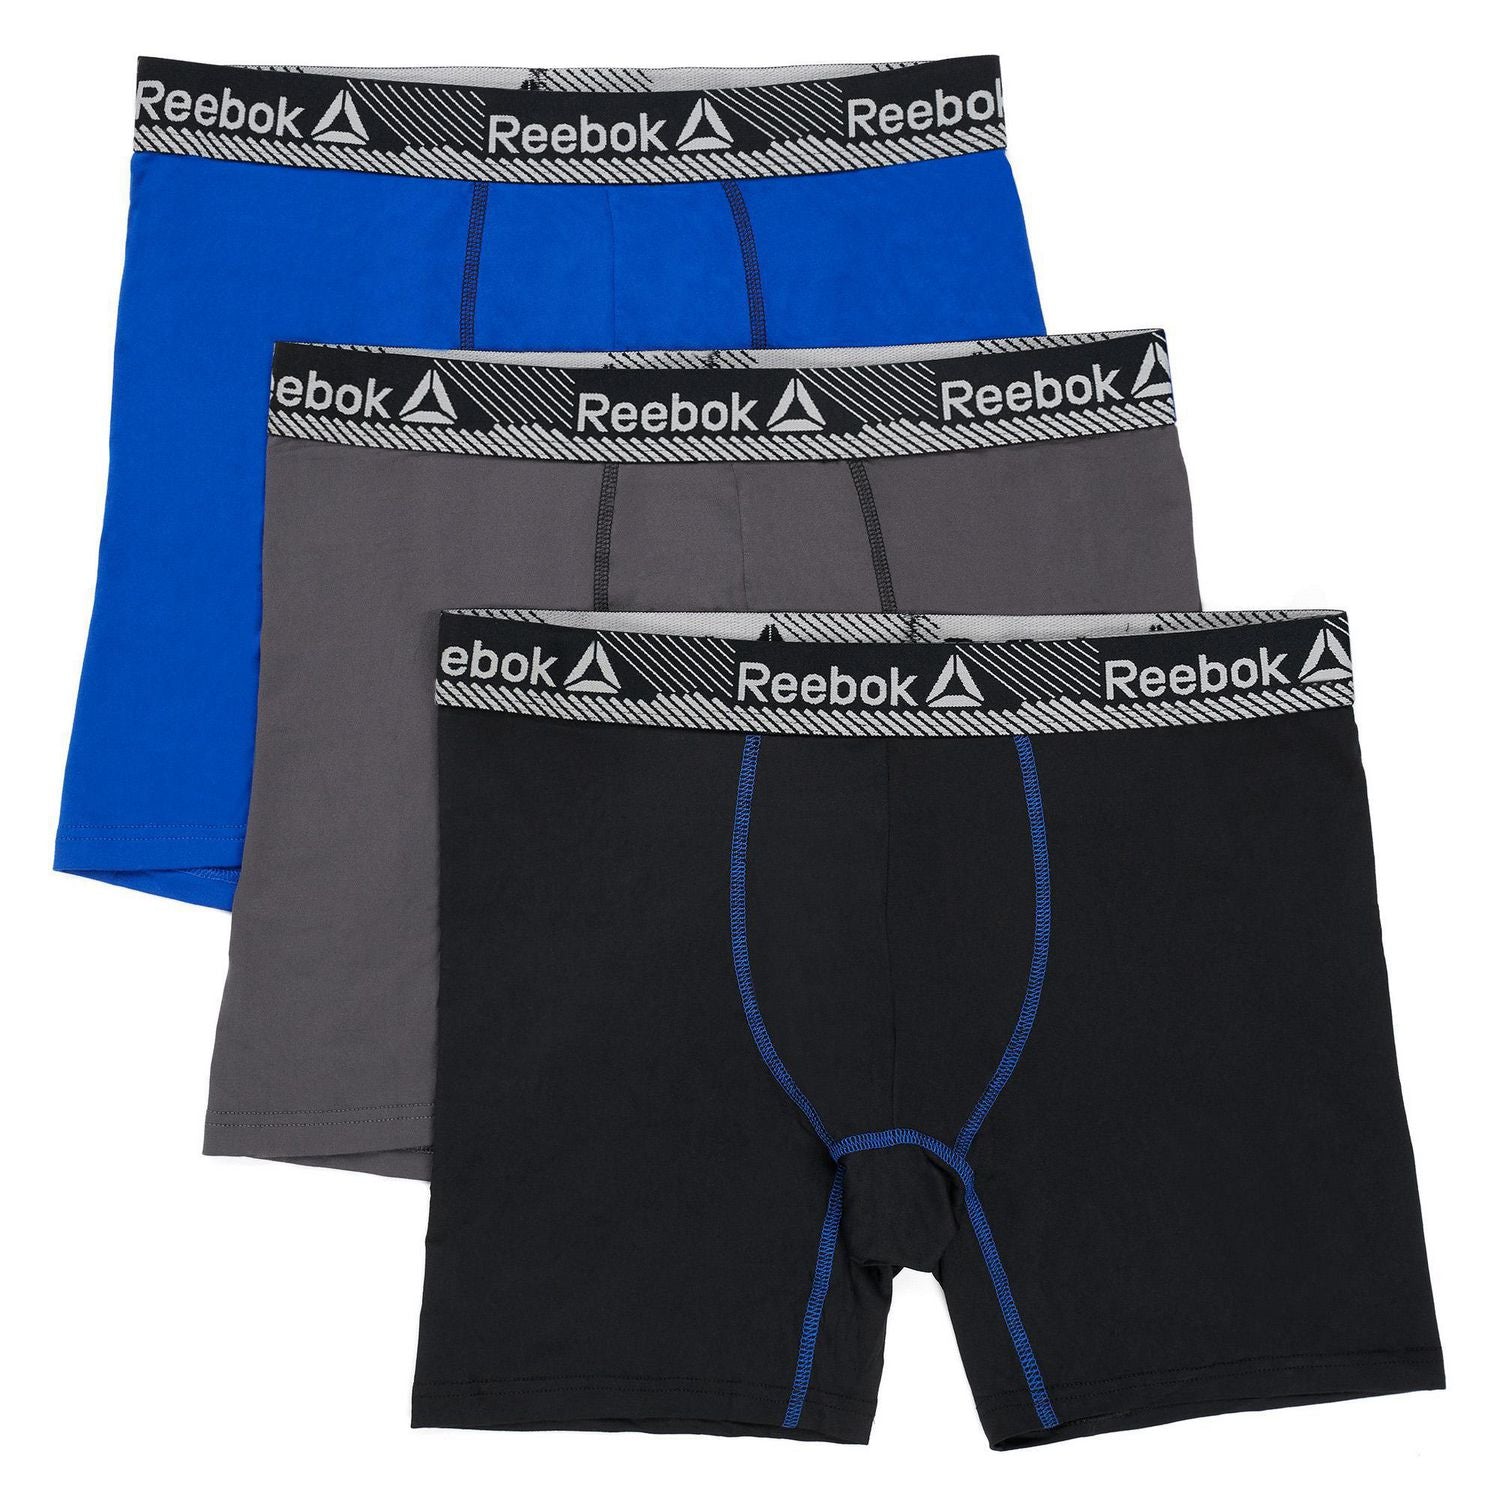 5 x Champion Elite Men's Boxer Briefs Underwear with Fly - S M L XL AU STOCK